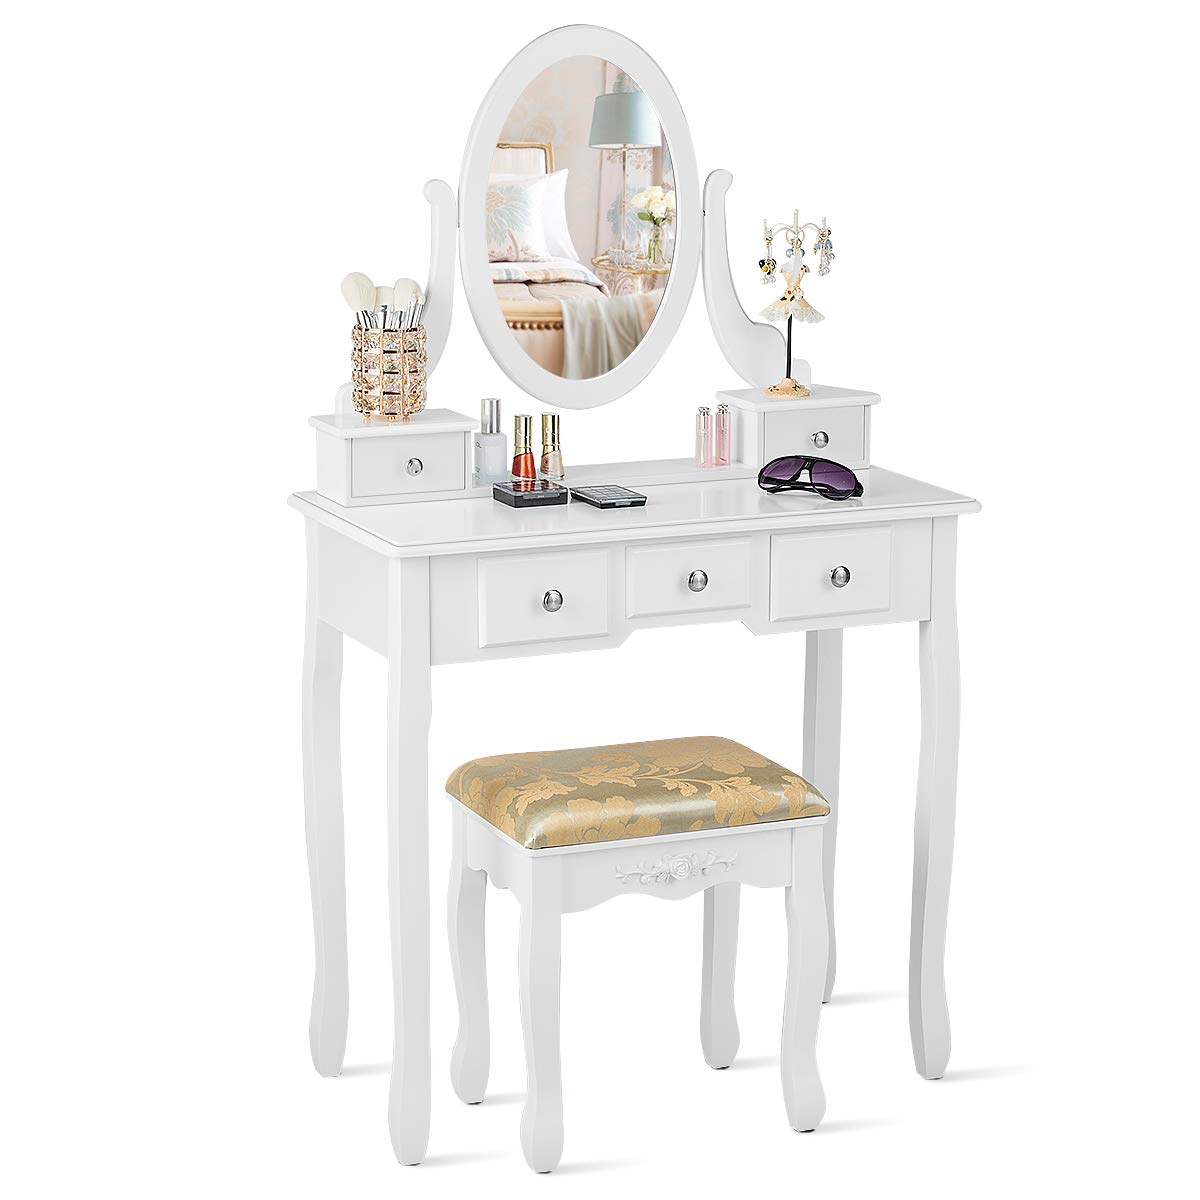 CHARMAID Vanity Table Set with Rotatable Oval Mirror